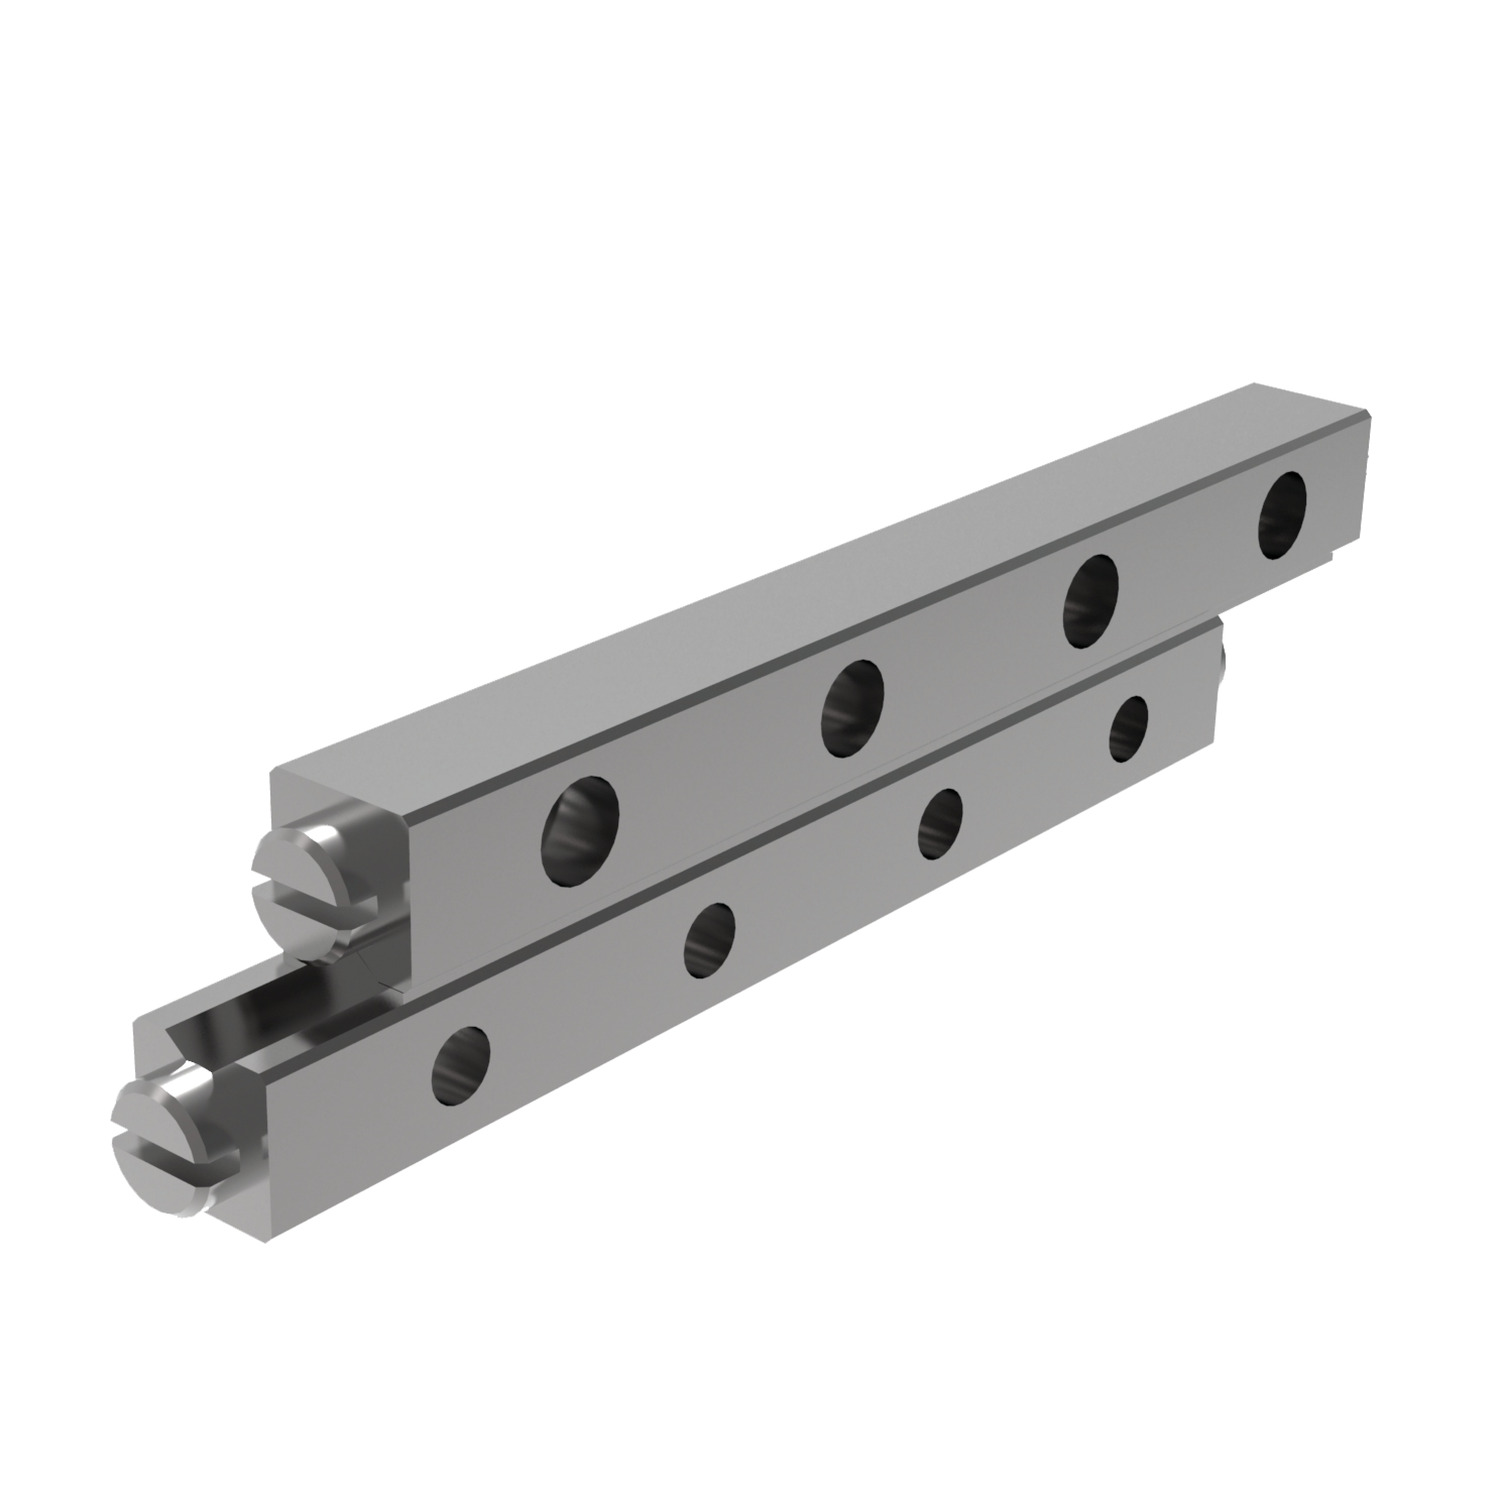 L1000.02-030 Crossed roller rail sets size 1 x 90mm Standard linear bearings sets consists of: 4 pcs. Rails, 2 pcs. roller cages, 8 pcs. end screws EC:20161965 WG:05063055211260